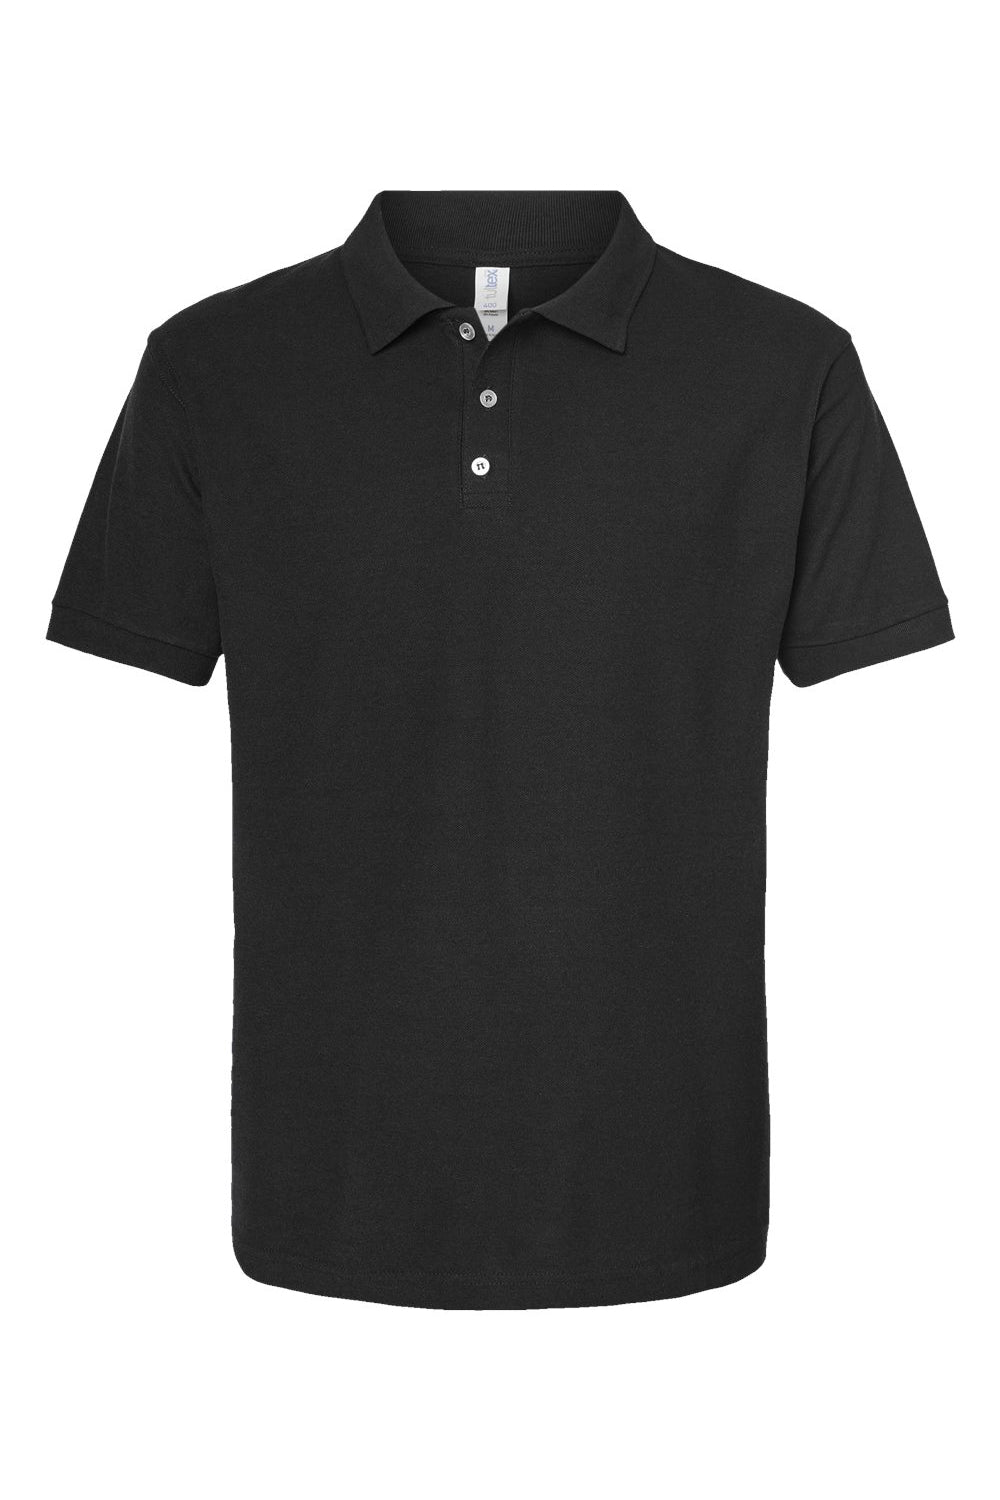 Tultex 400 Mens Sport Shirt Sleeve Polo Shirt Black Flat Front